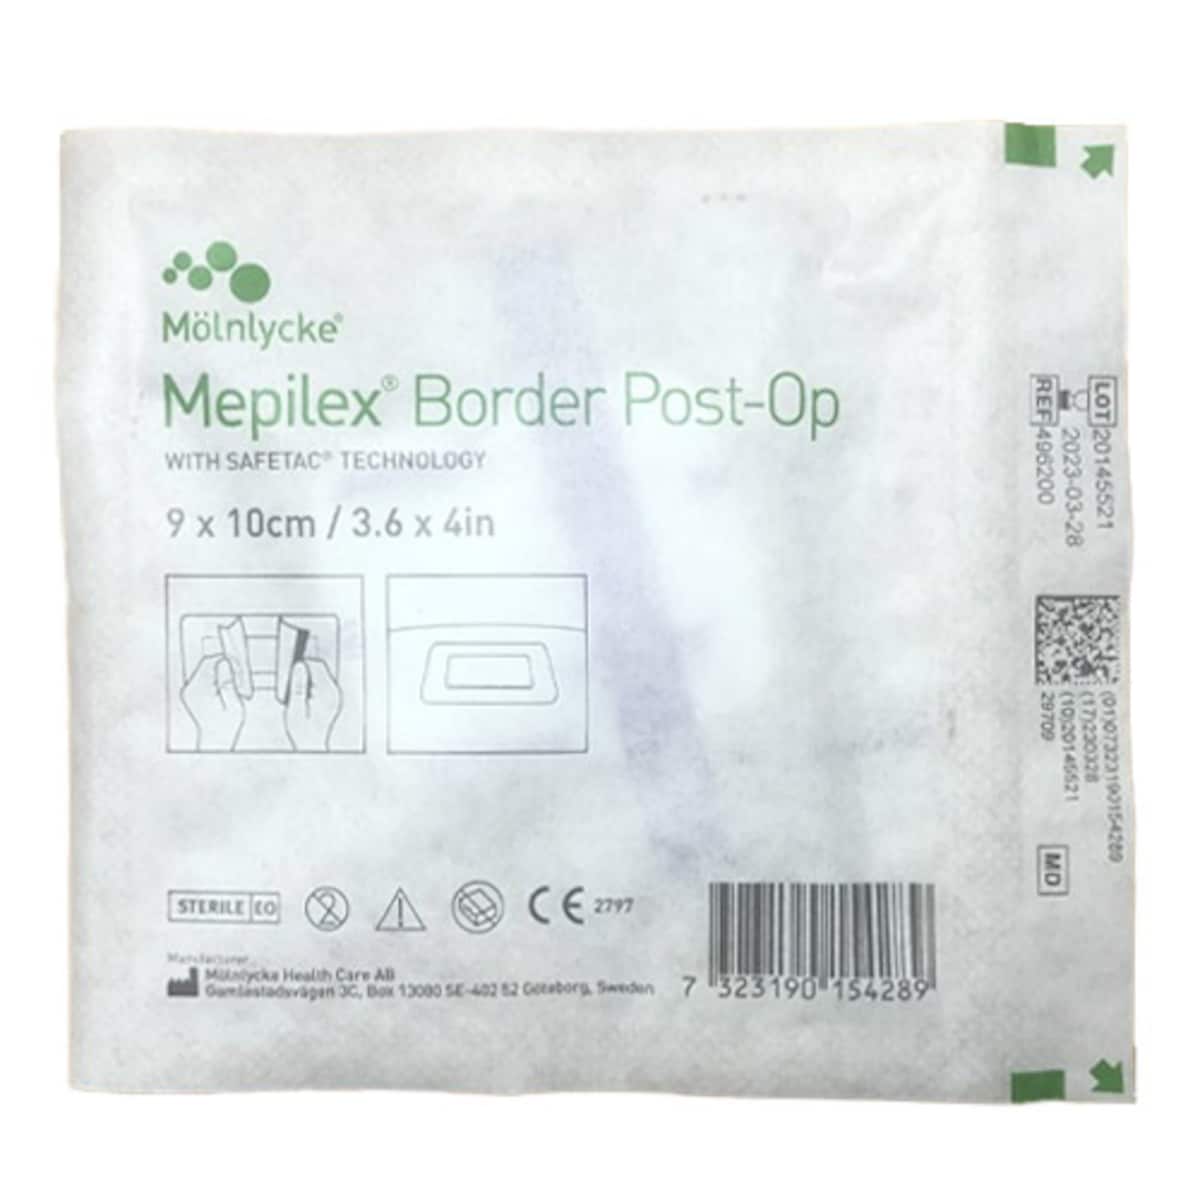 Mepilex Border Post-Op Wound Dressing 496200 9cm x 10cm Single